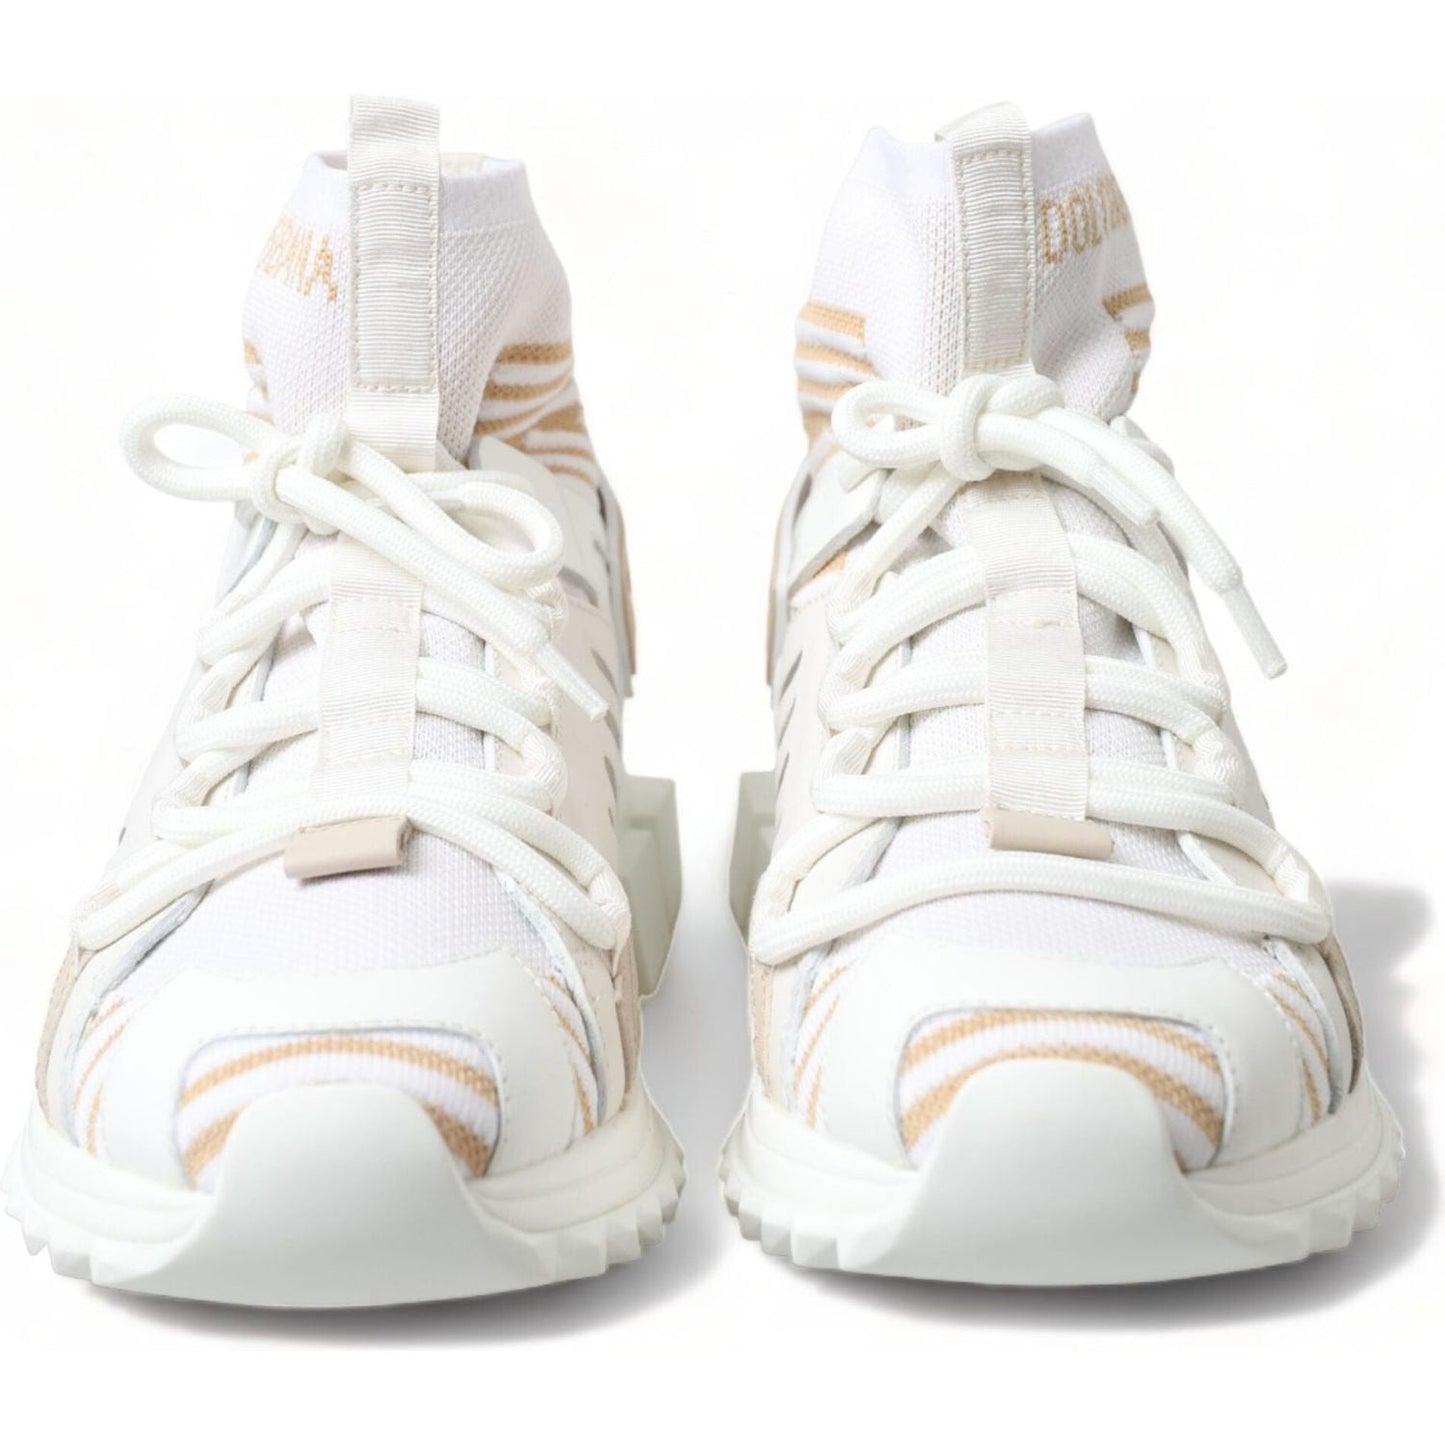 Dolce & Gabbana Elegant Sorrento Slip-On Sneakers in White and Beige white-beige-sorrento-socks-sneakers-shoes-1 465A2443-BG-scaled-44f3ca75-470.jpg